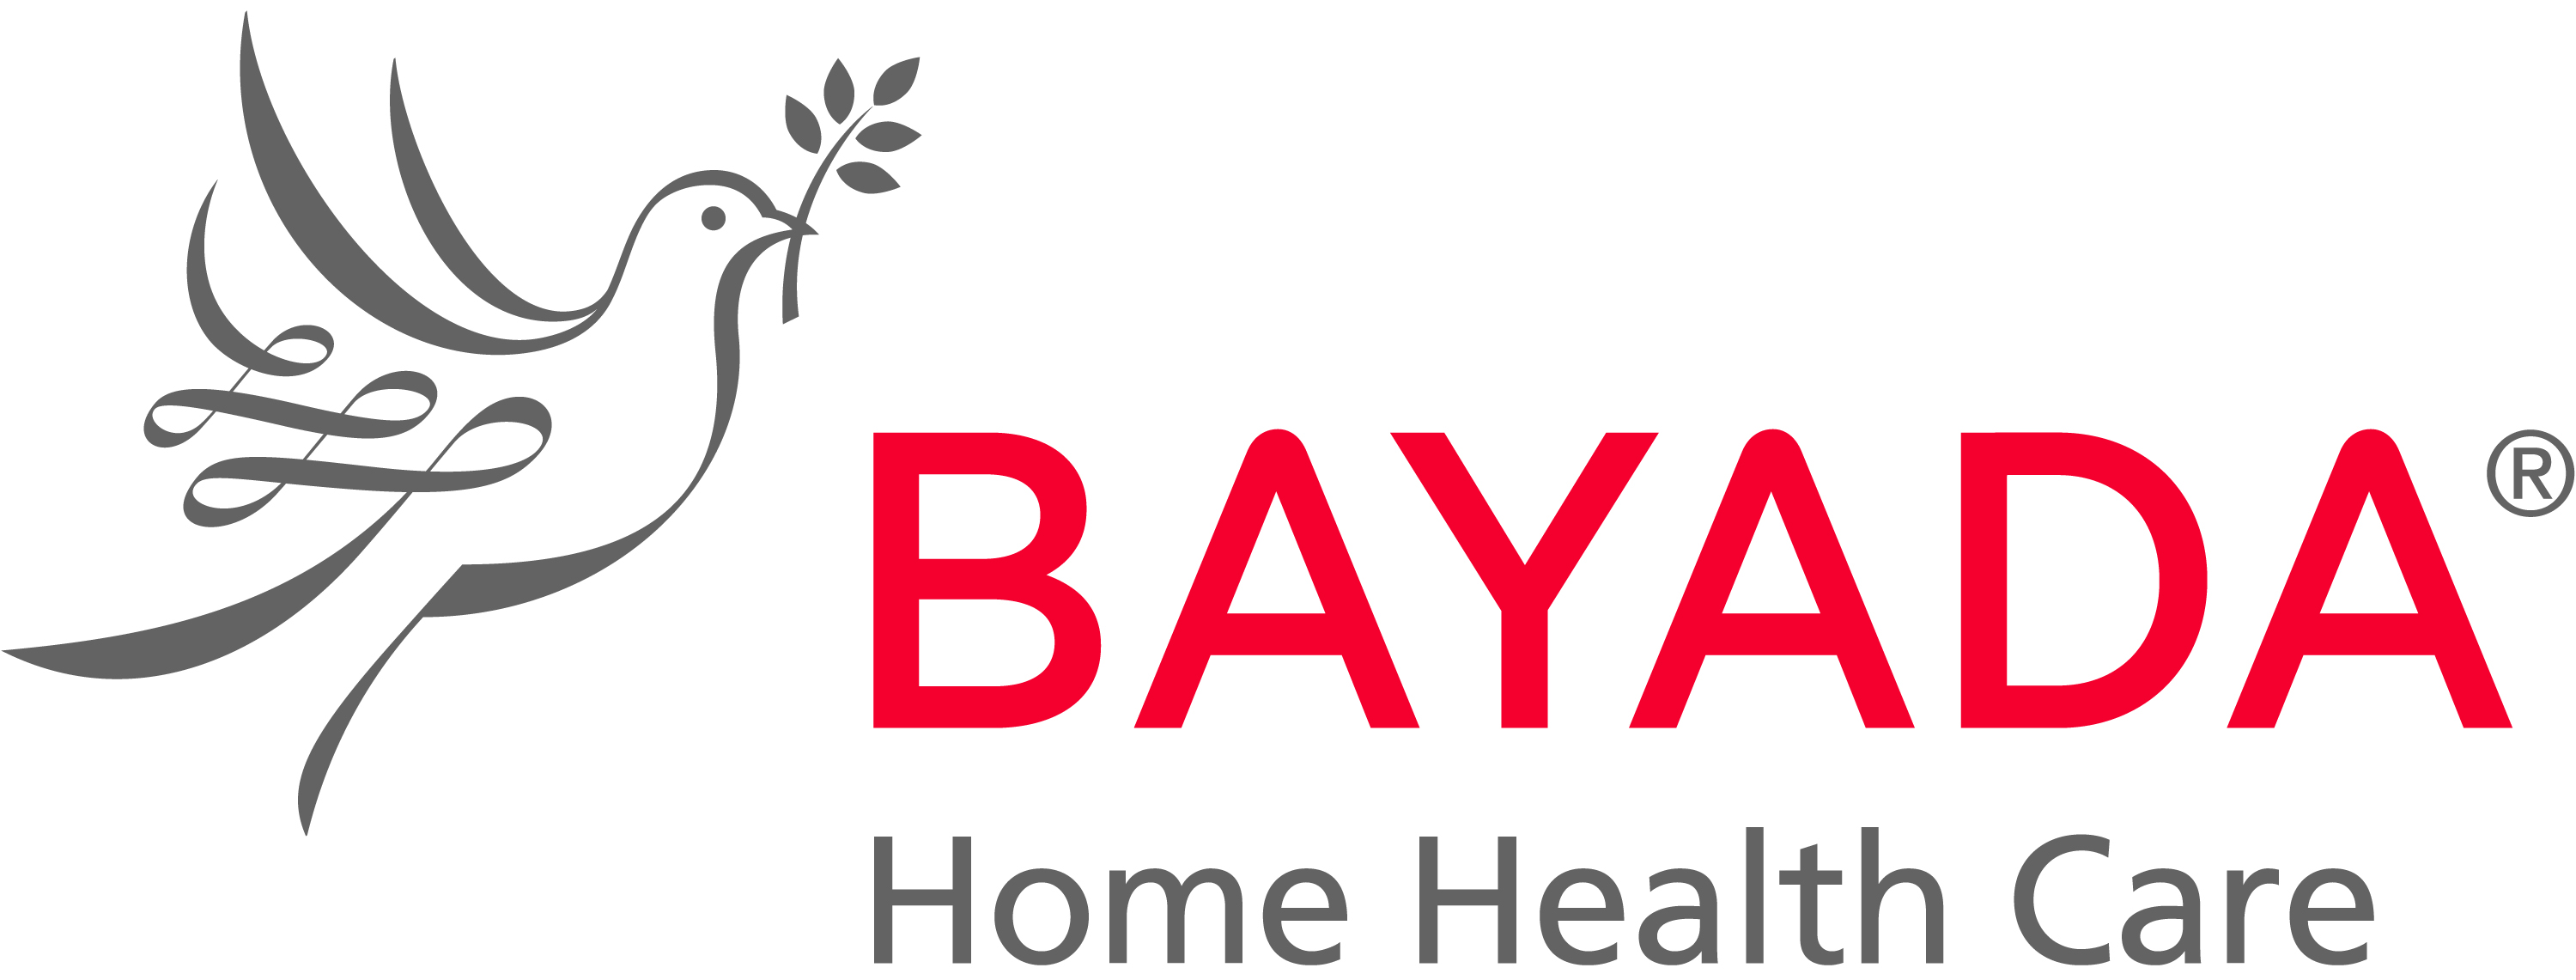 BAYADA Home Health Care - Morristown